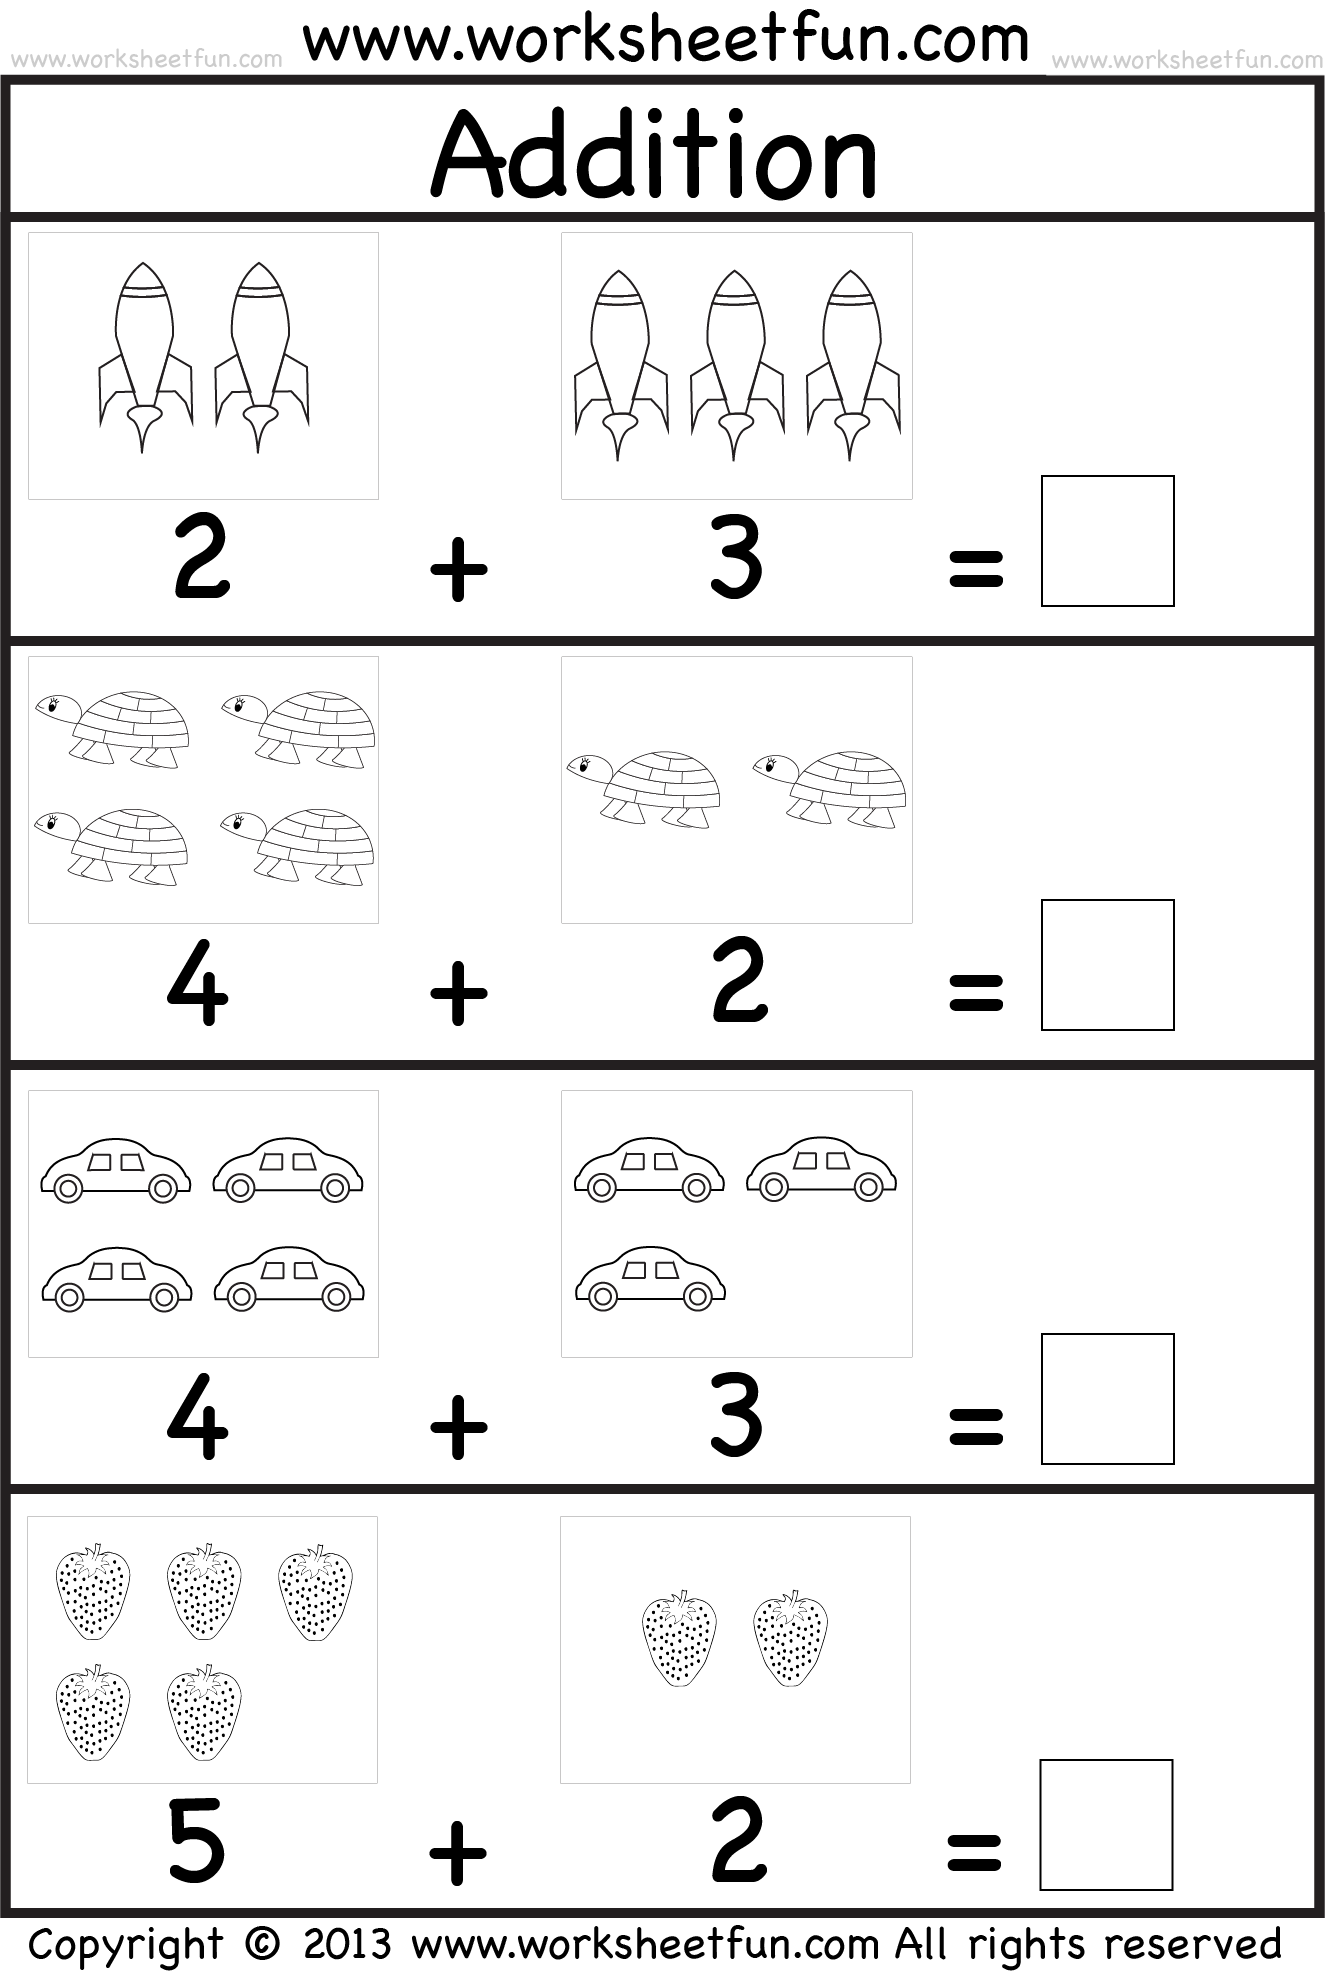 picture-addition-beginner-addition-kindergarten-kindergarten-addition